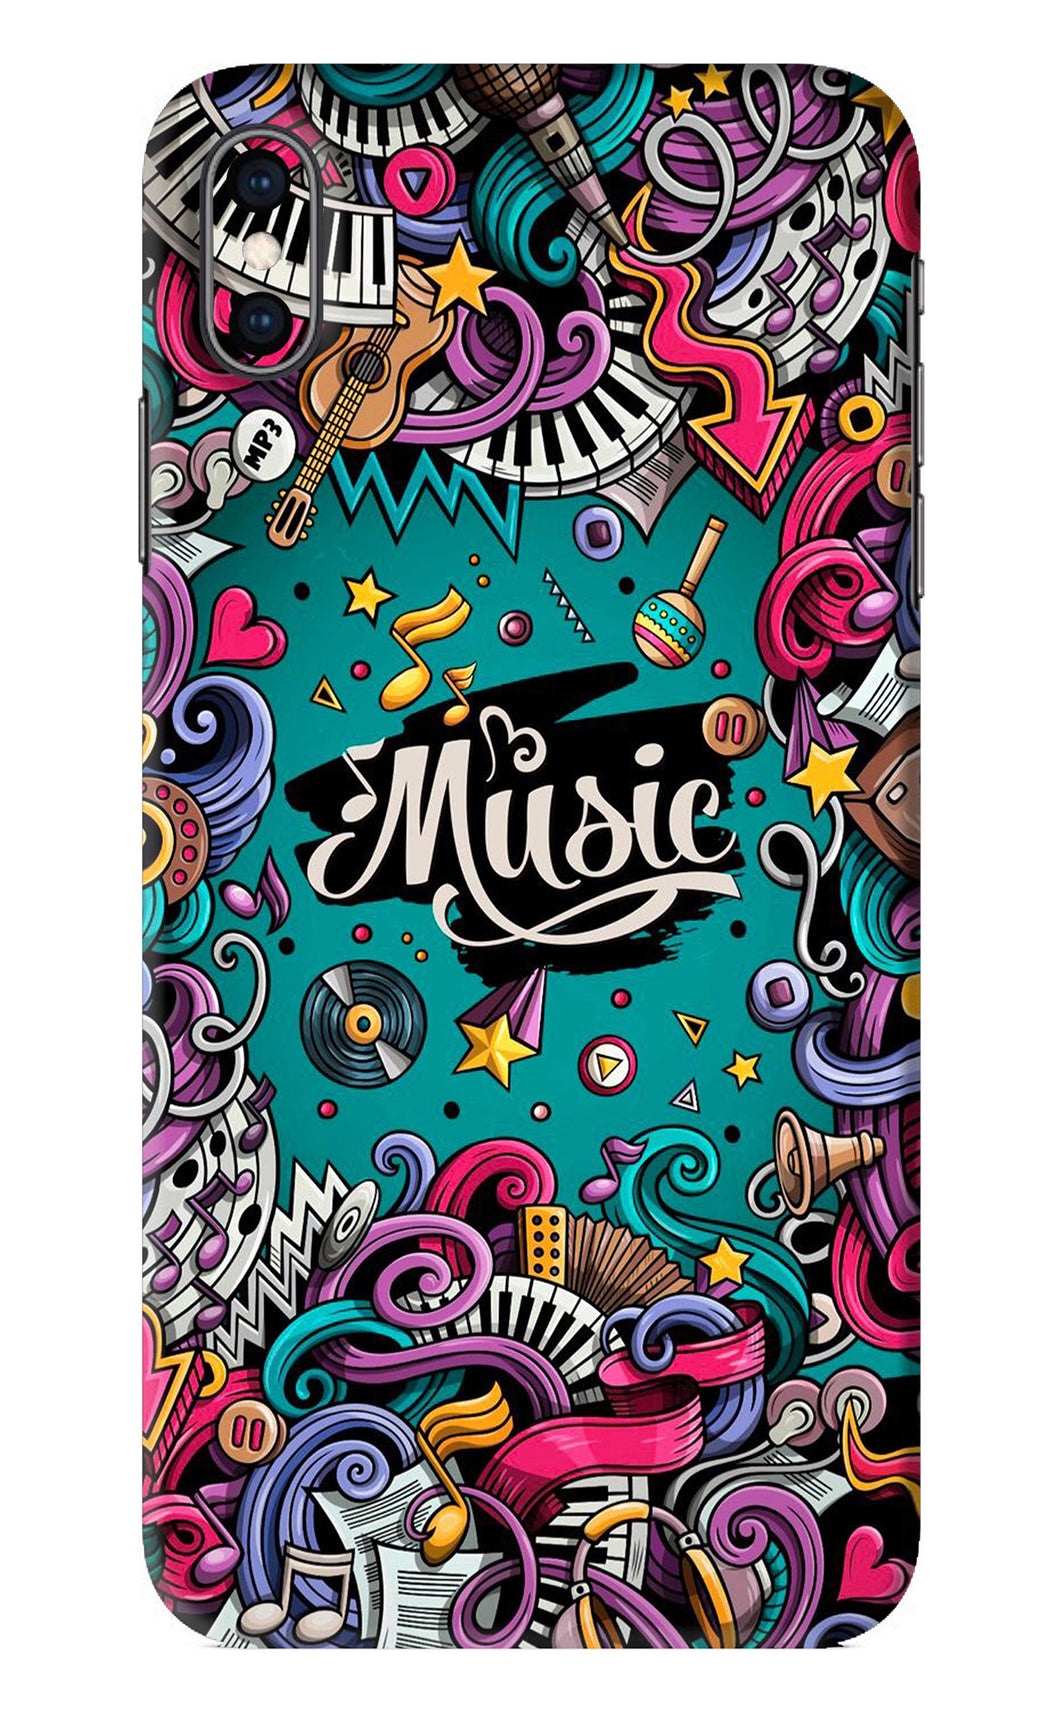 Music Graffiti iPhone XS Max Back Skin Wrap